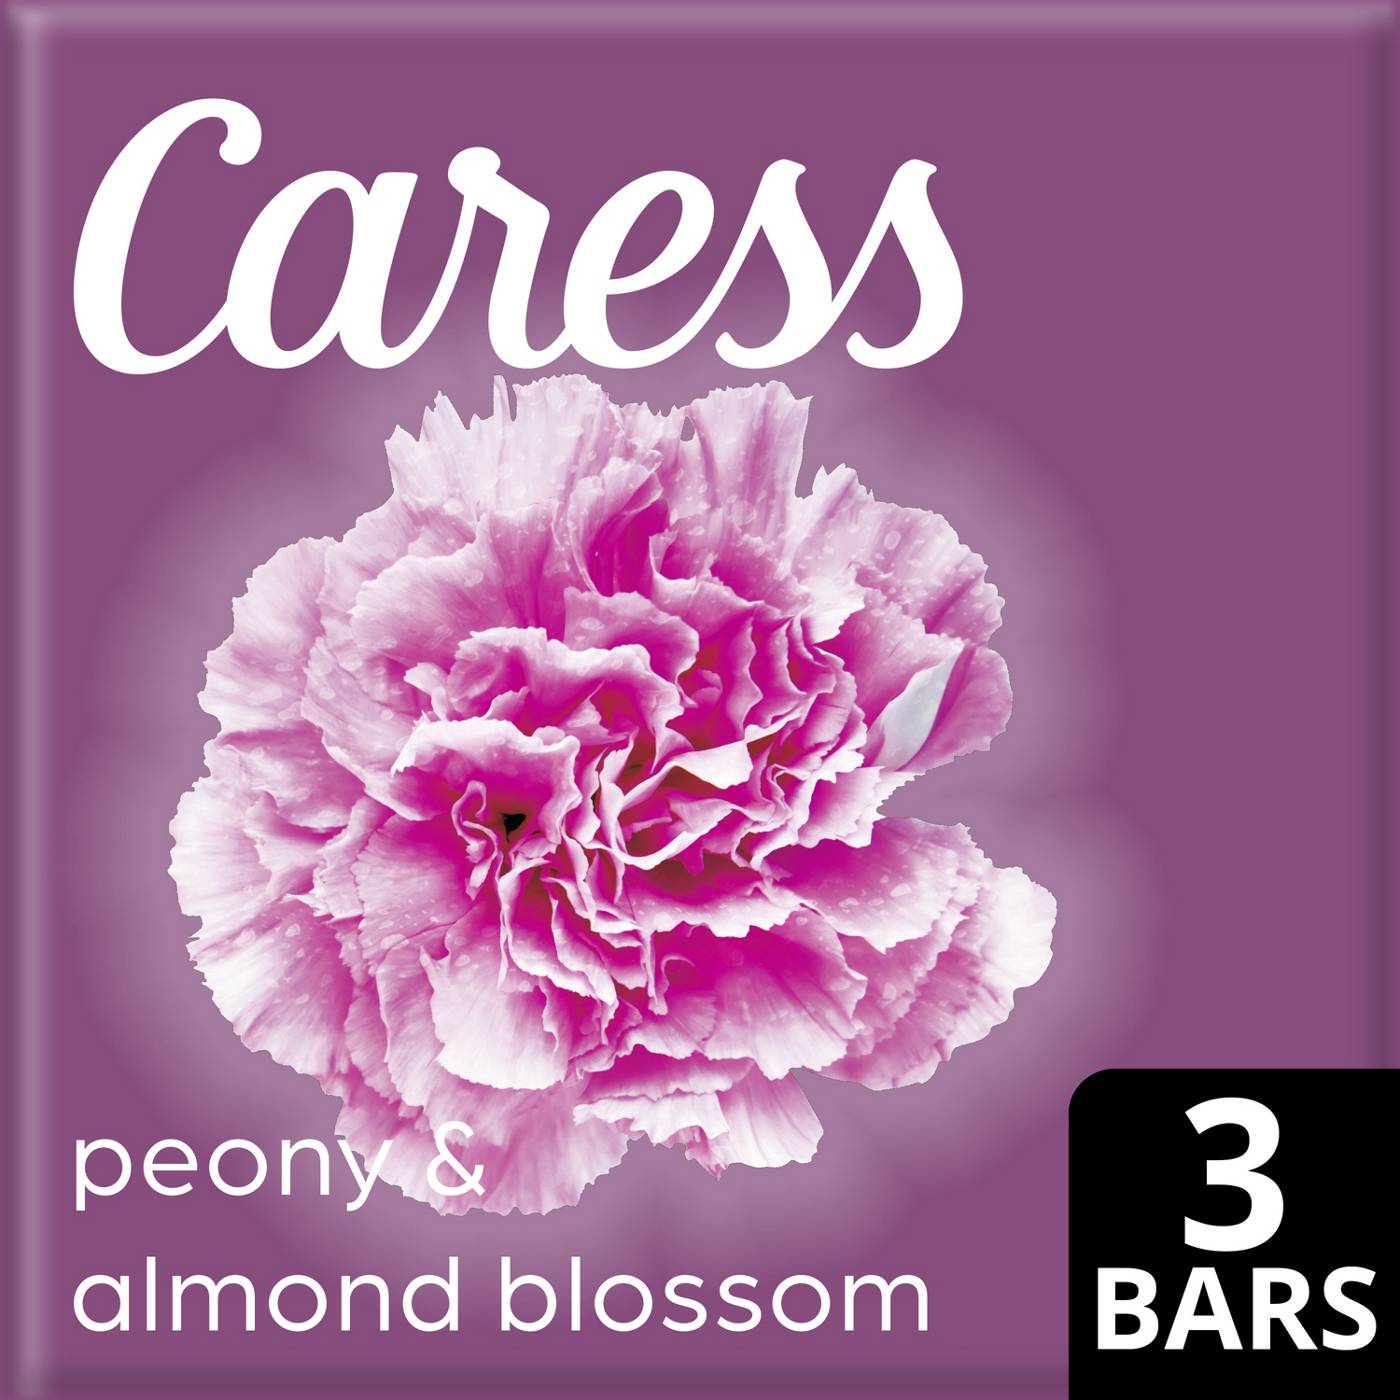 Caress Beauty Bars - Peony & Almond Blossom; image 7 of 7